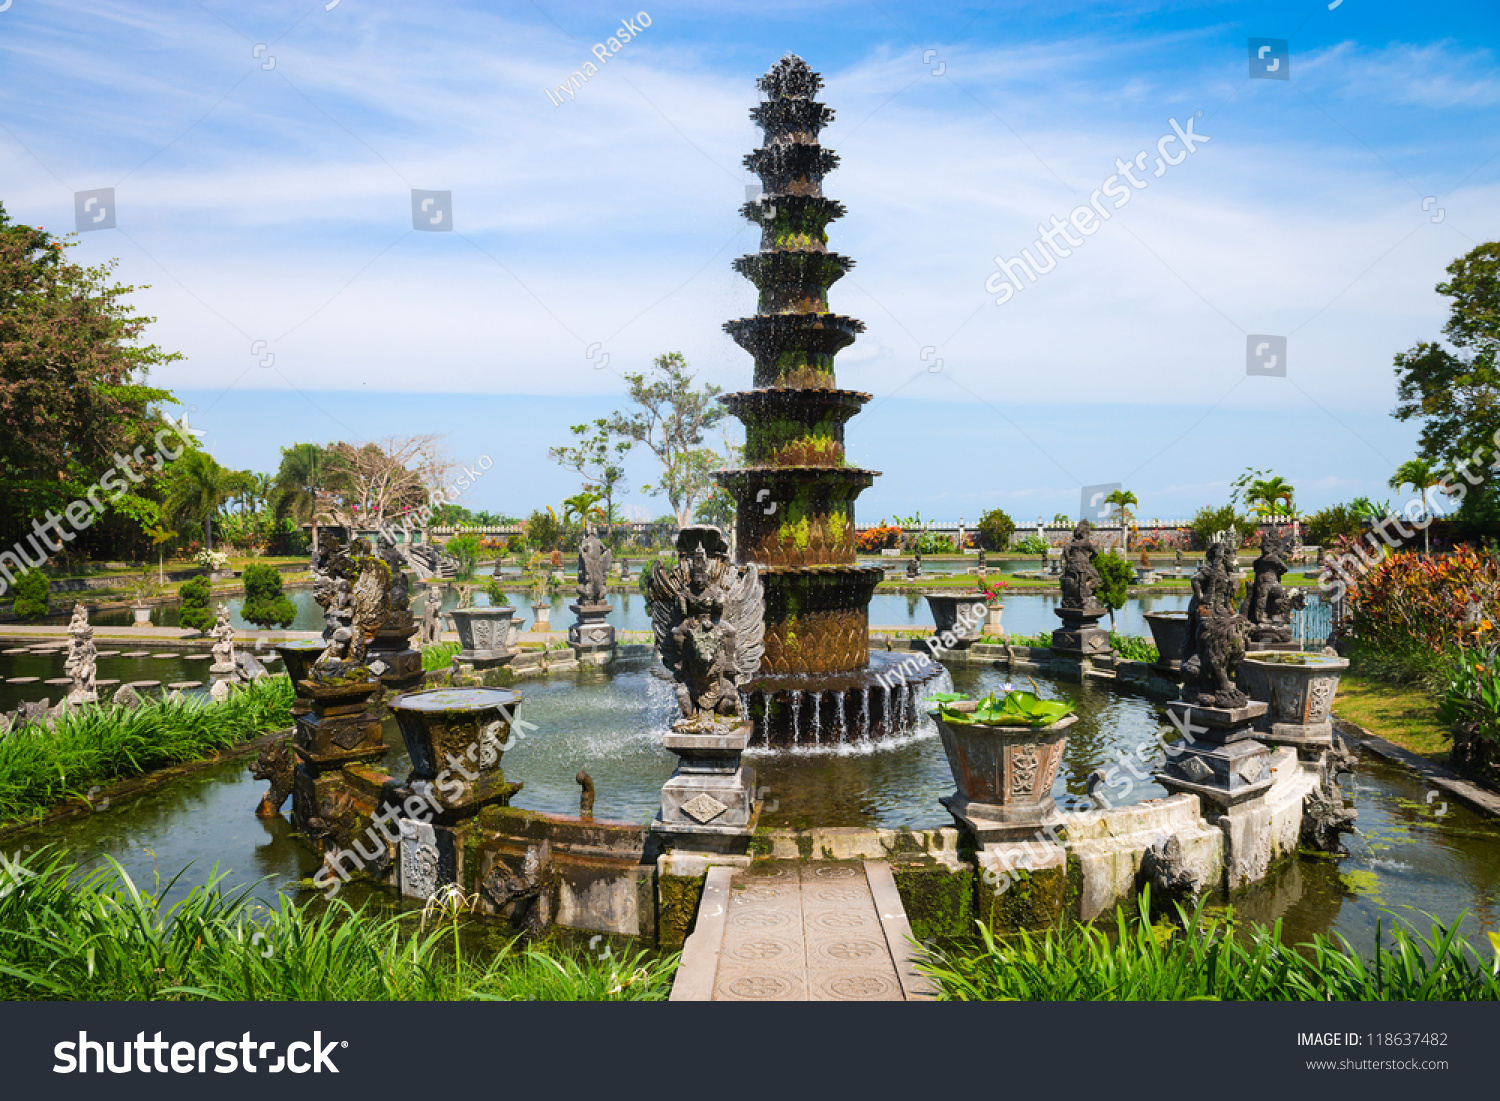 Big fountain in Royal water palace and pools Tirthagangga, Bali island, Indonesia #118637482